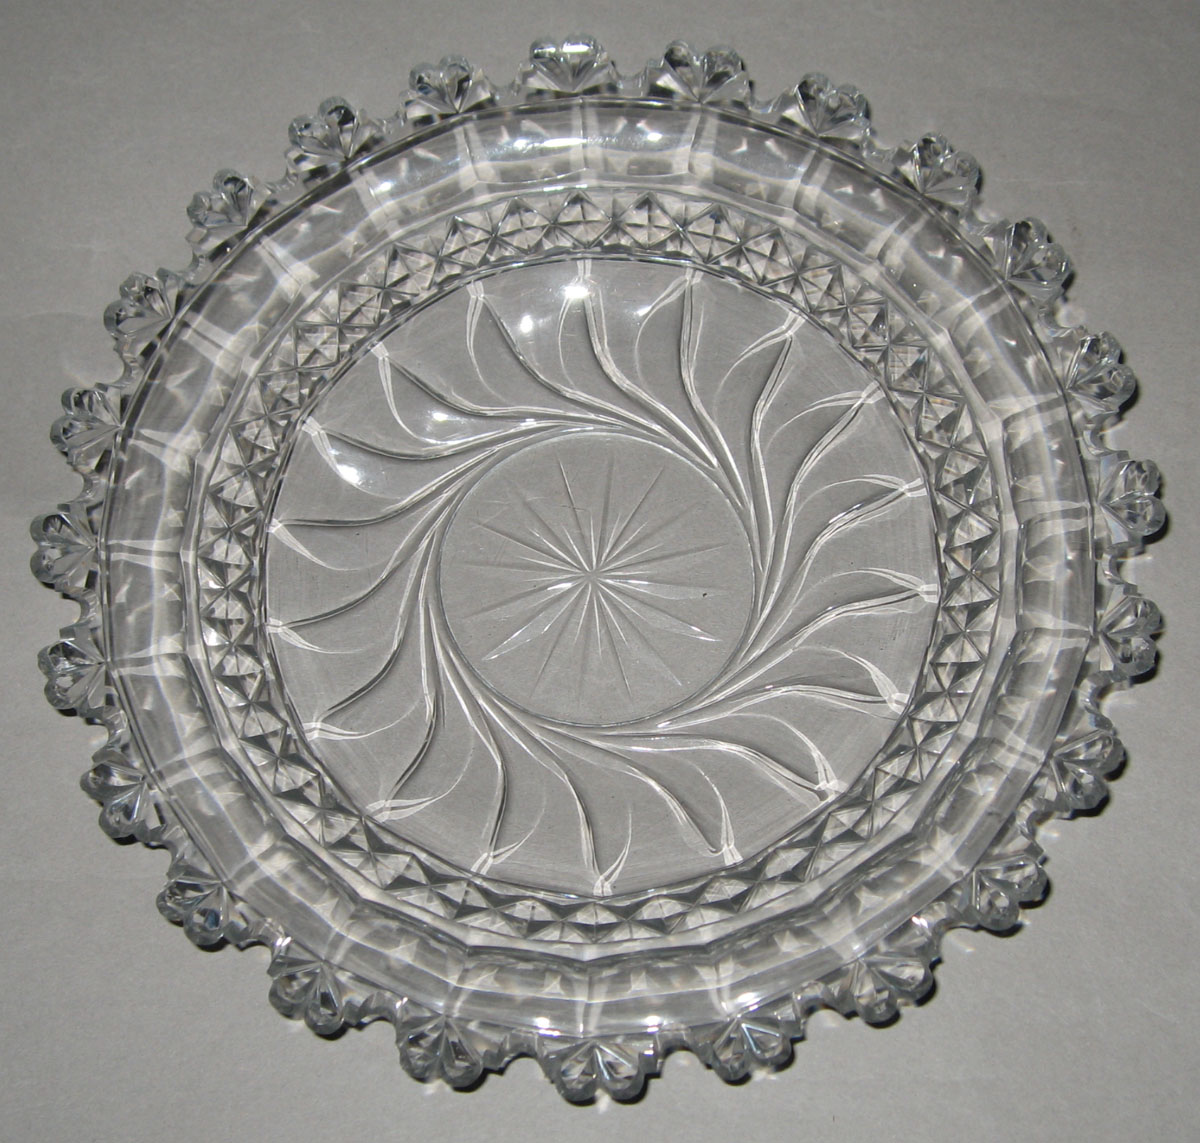 1962.0154.002 Glass plate